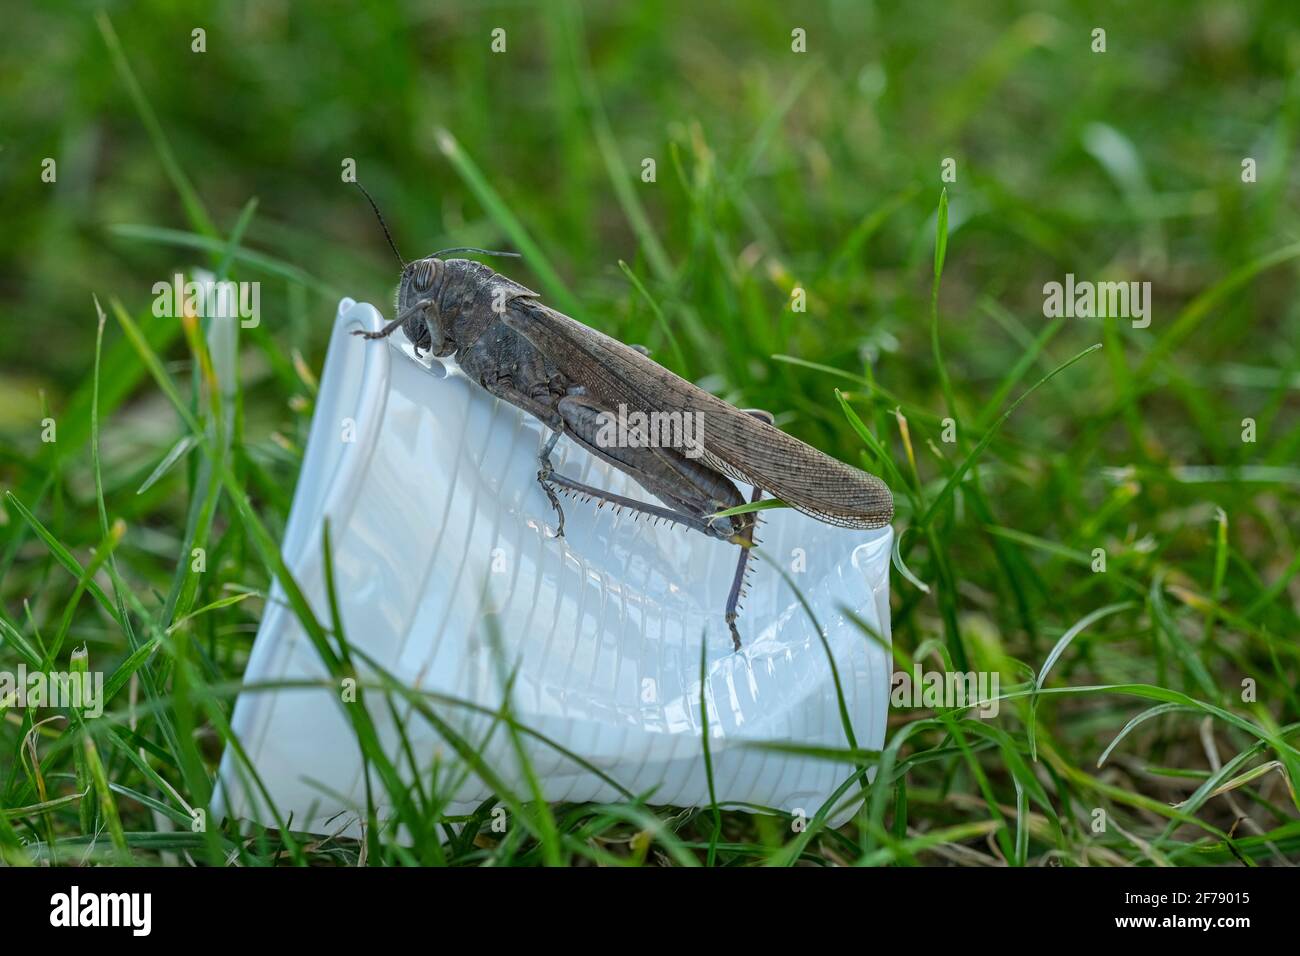 Wild locust living on discarded plastic glass garbage,animal habitat pollution Stock Photo